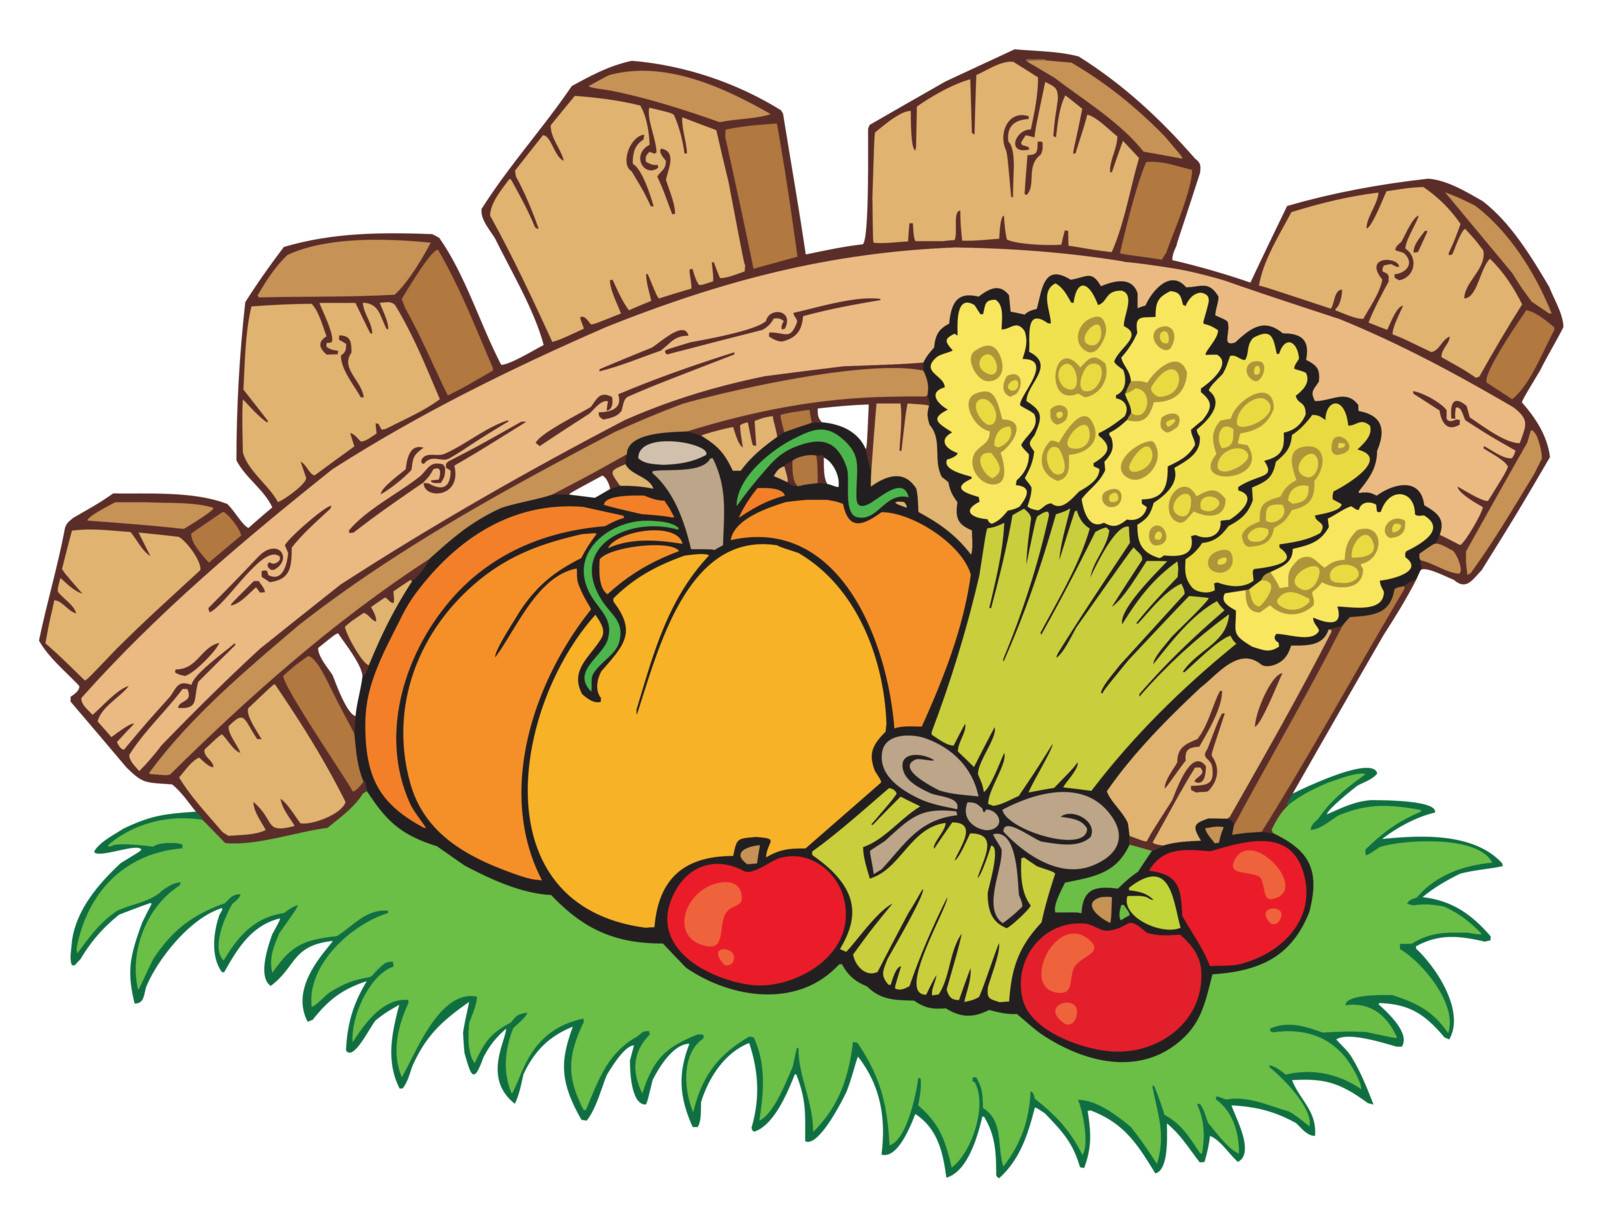 Thanksgiving motive with harvest - vector illustration.